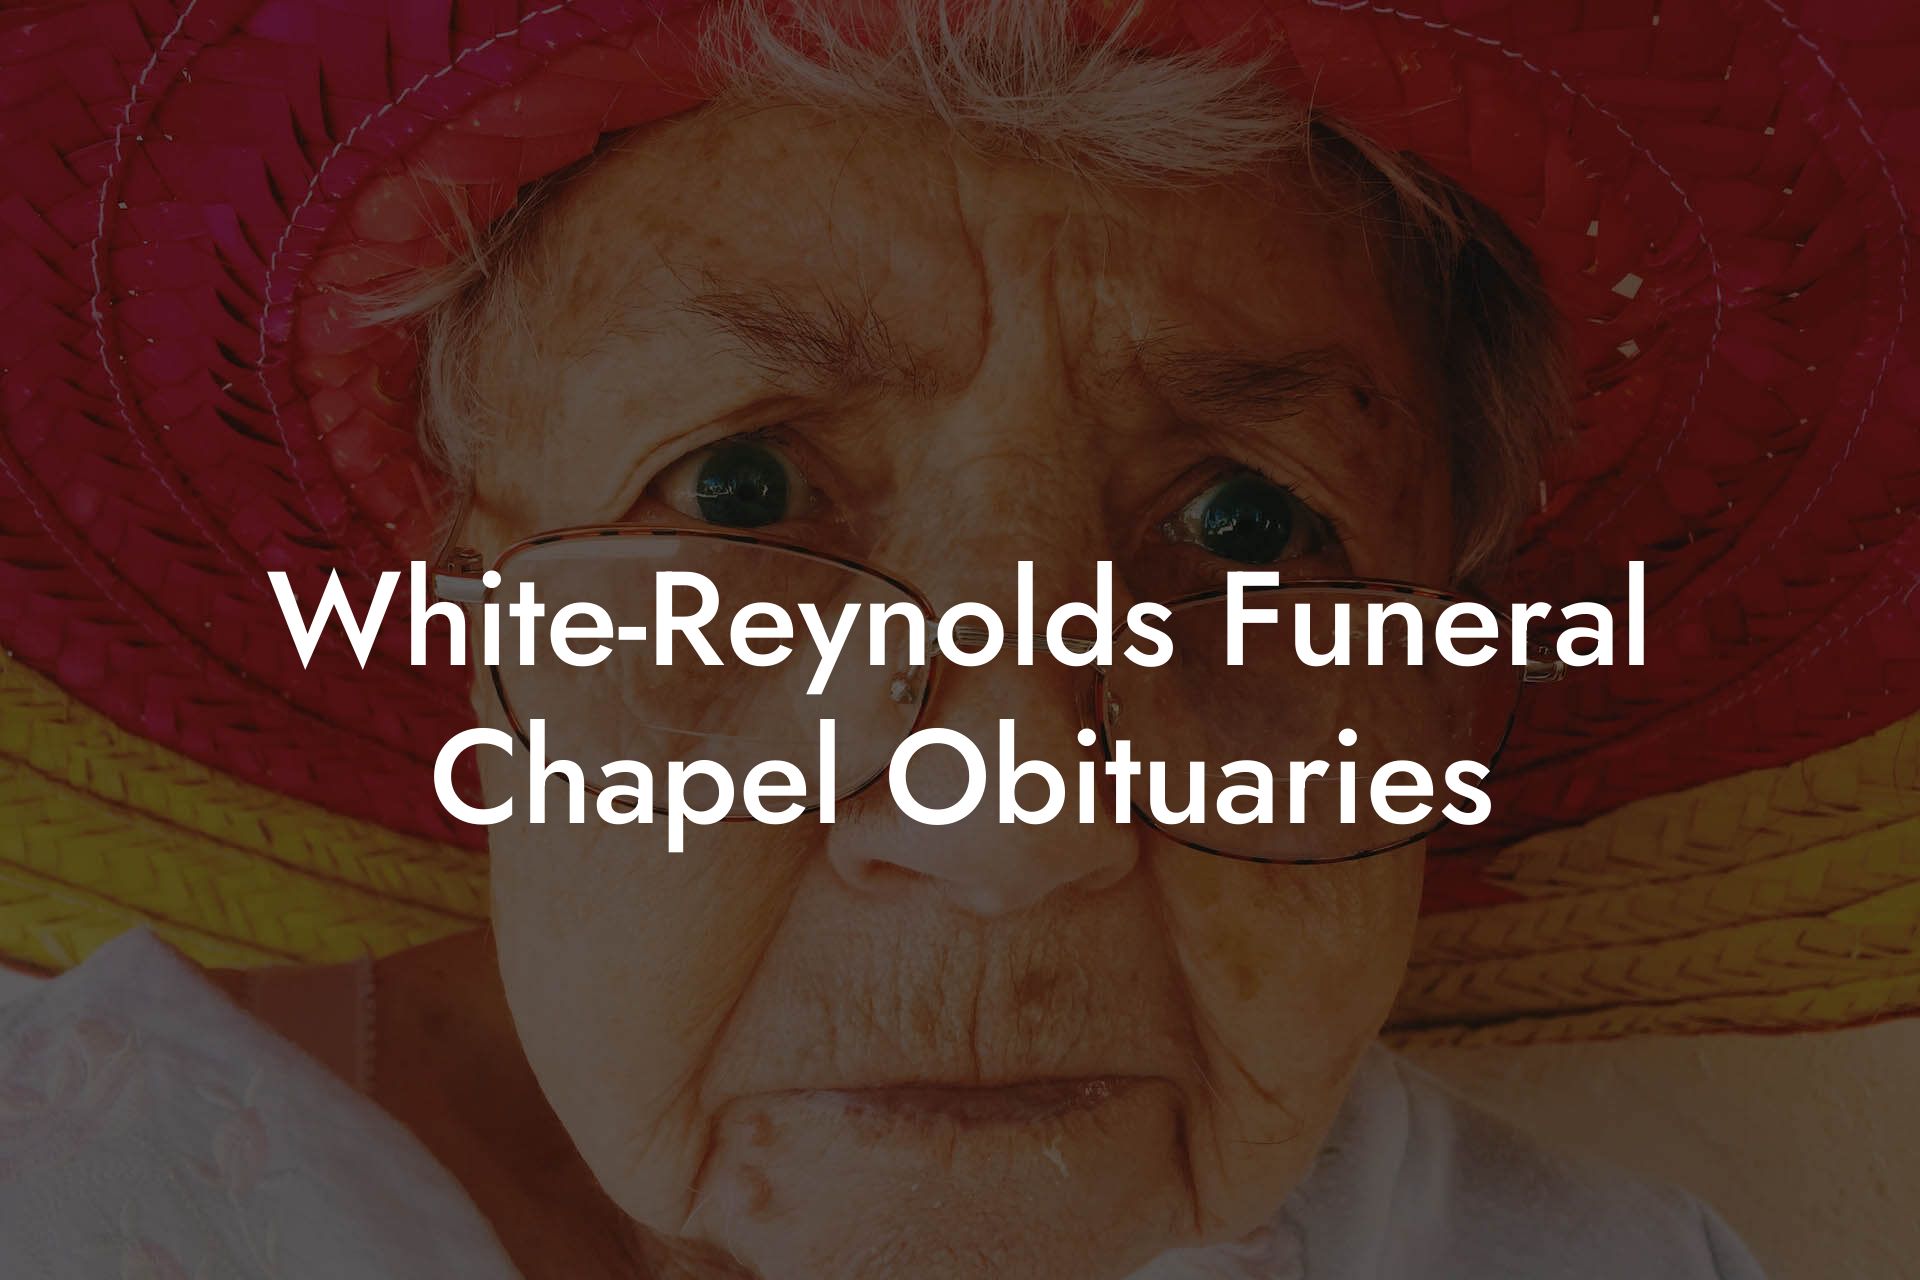 White-Reynolds Funeral Chapel Obituaries